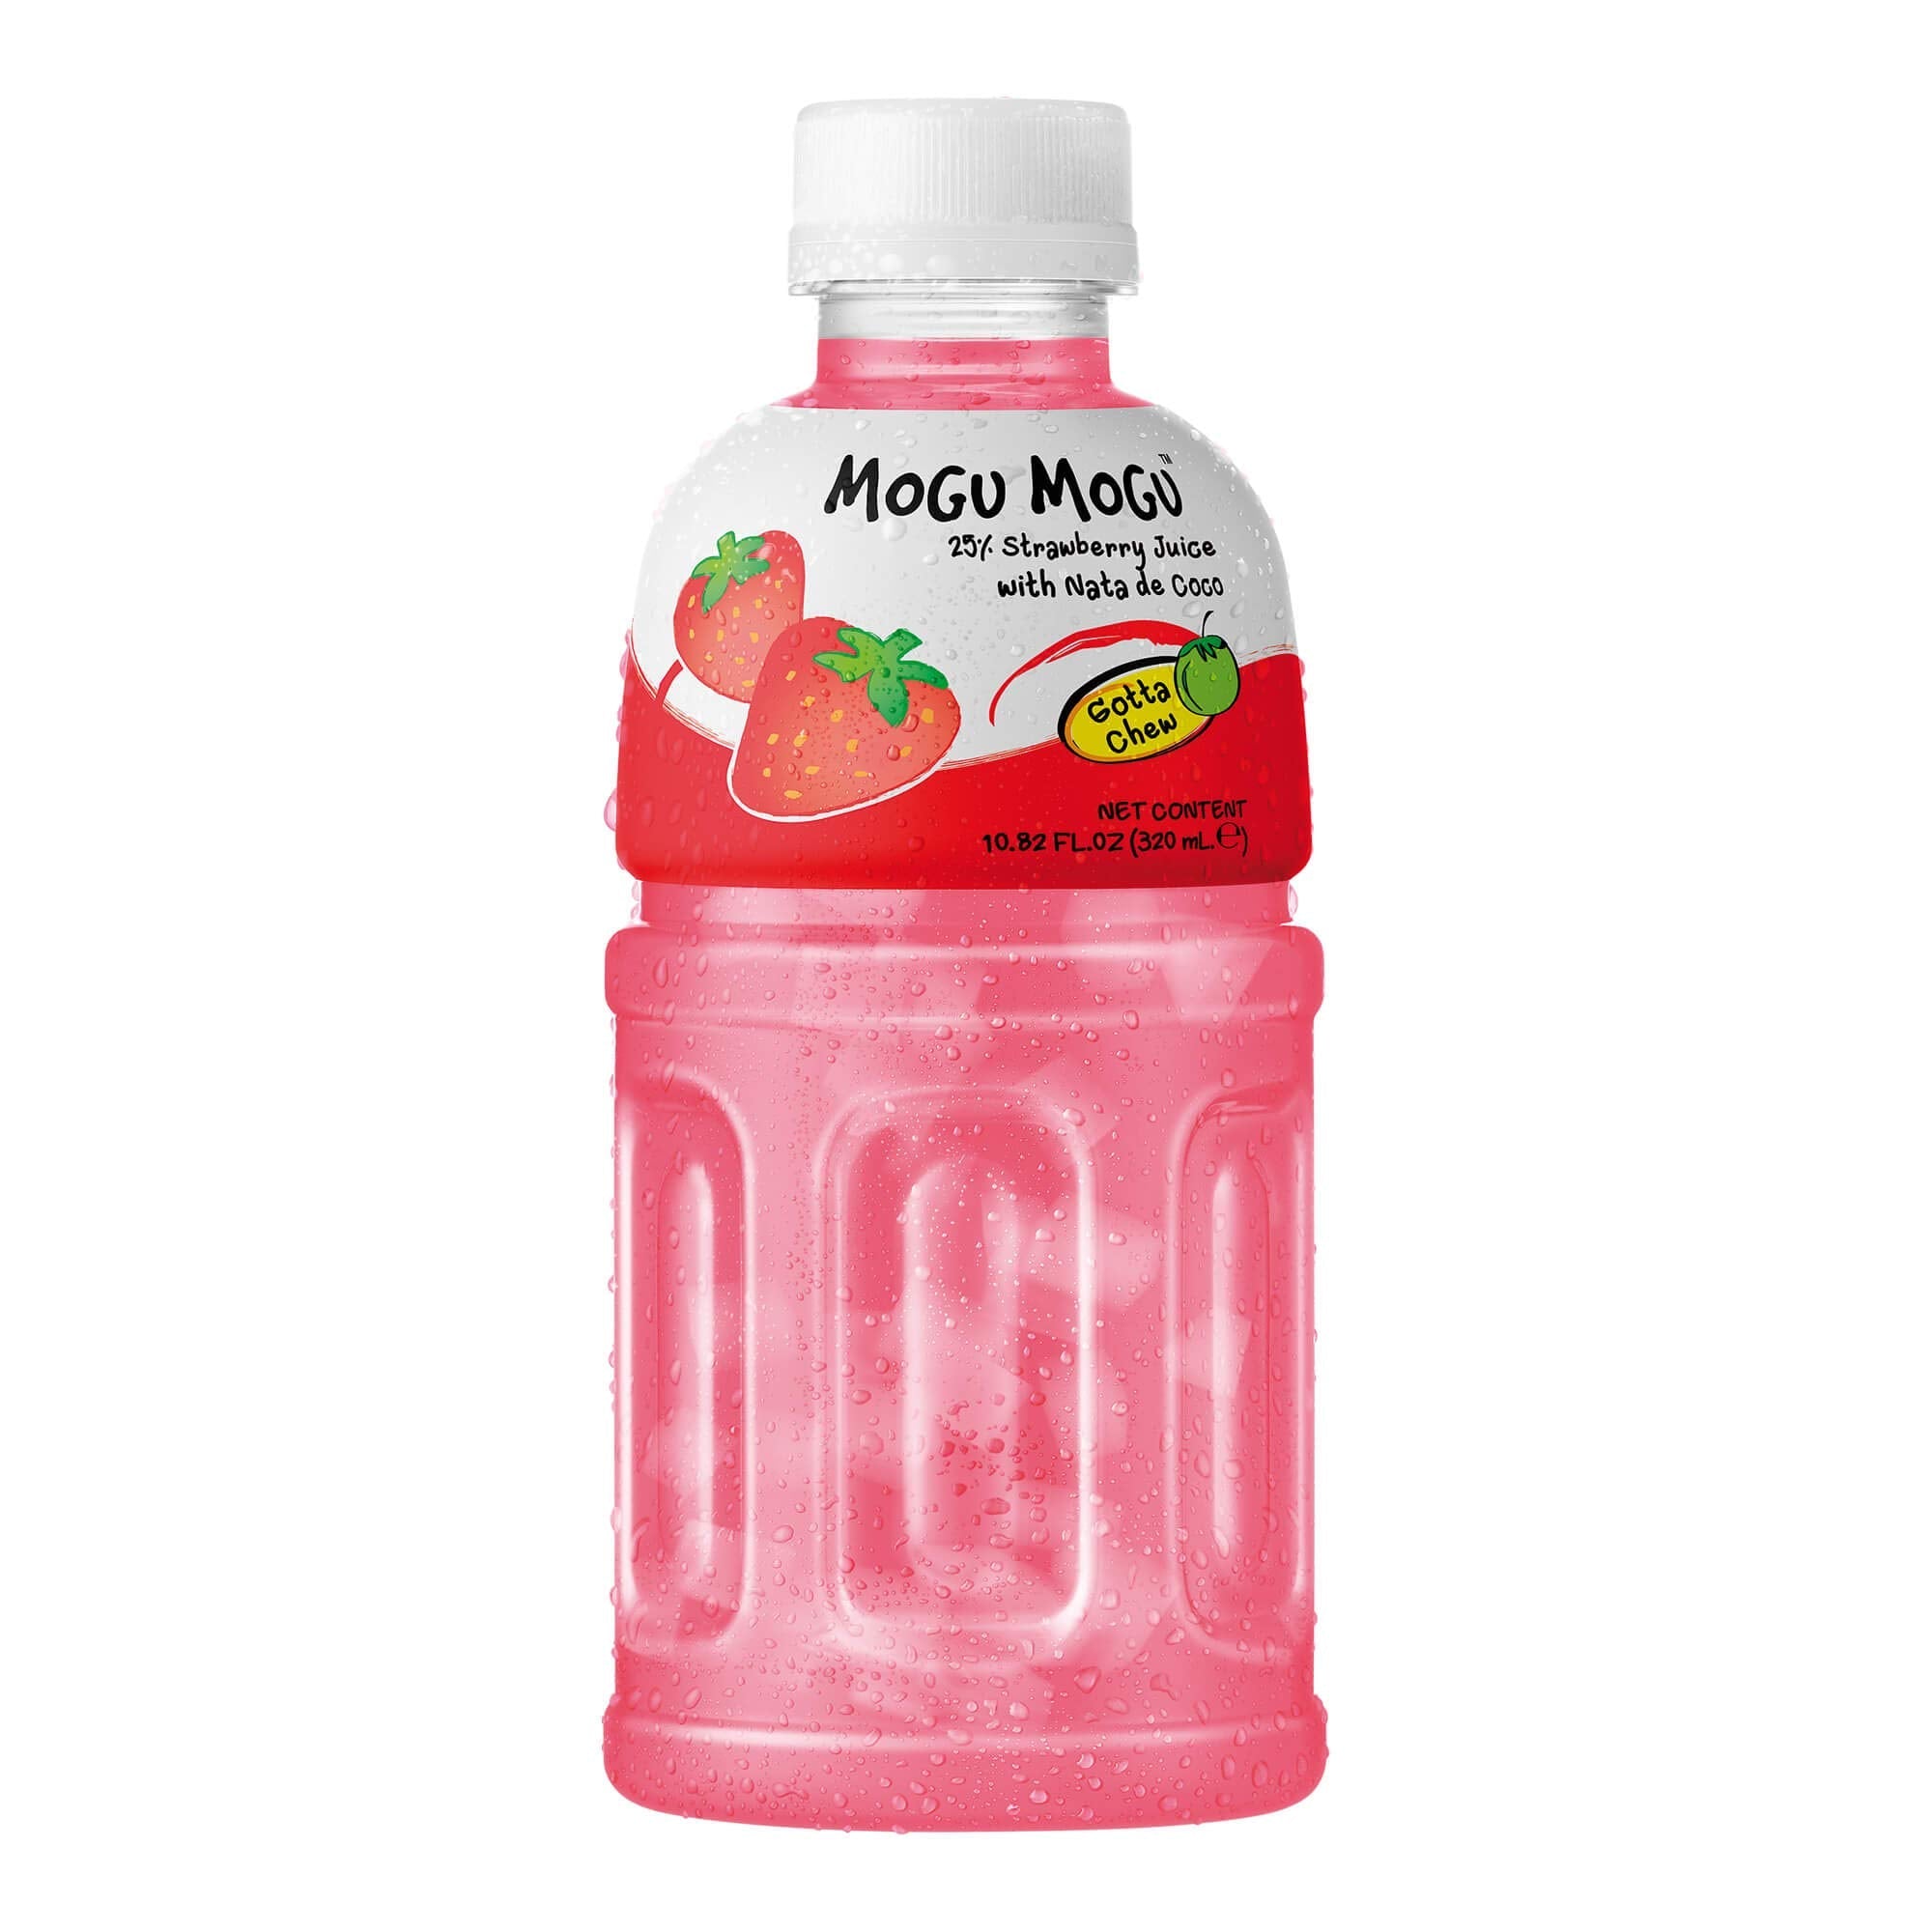 Mogu Mogu Strawberry Flavored Drink With Nata de Coconut 320ml (24 pack).